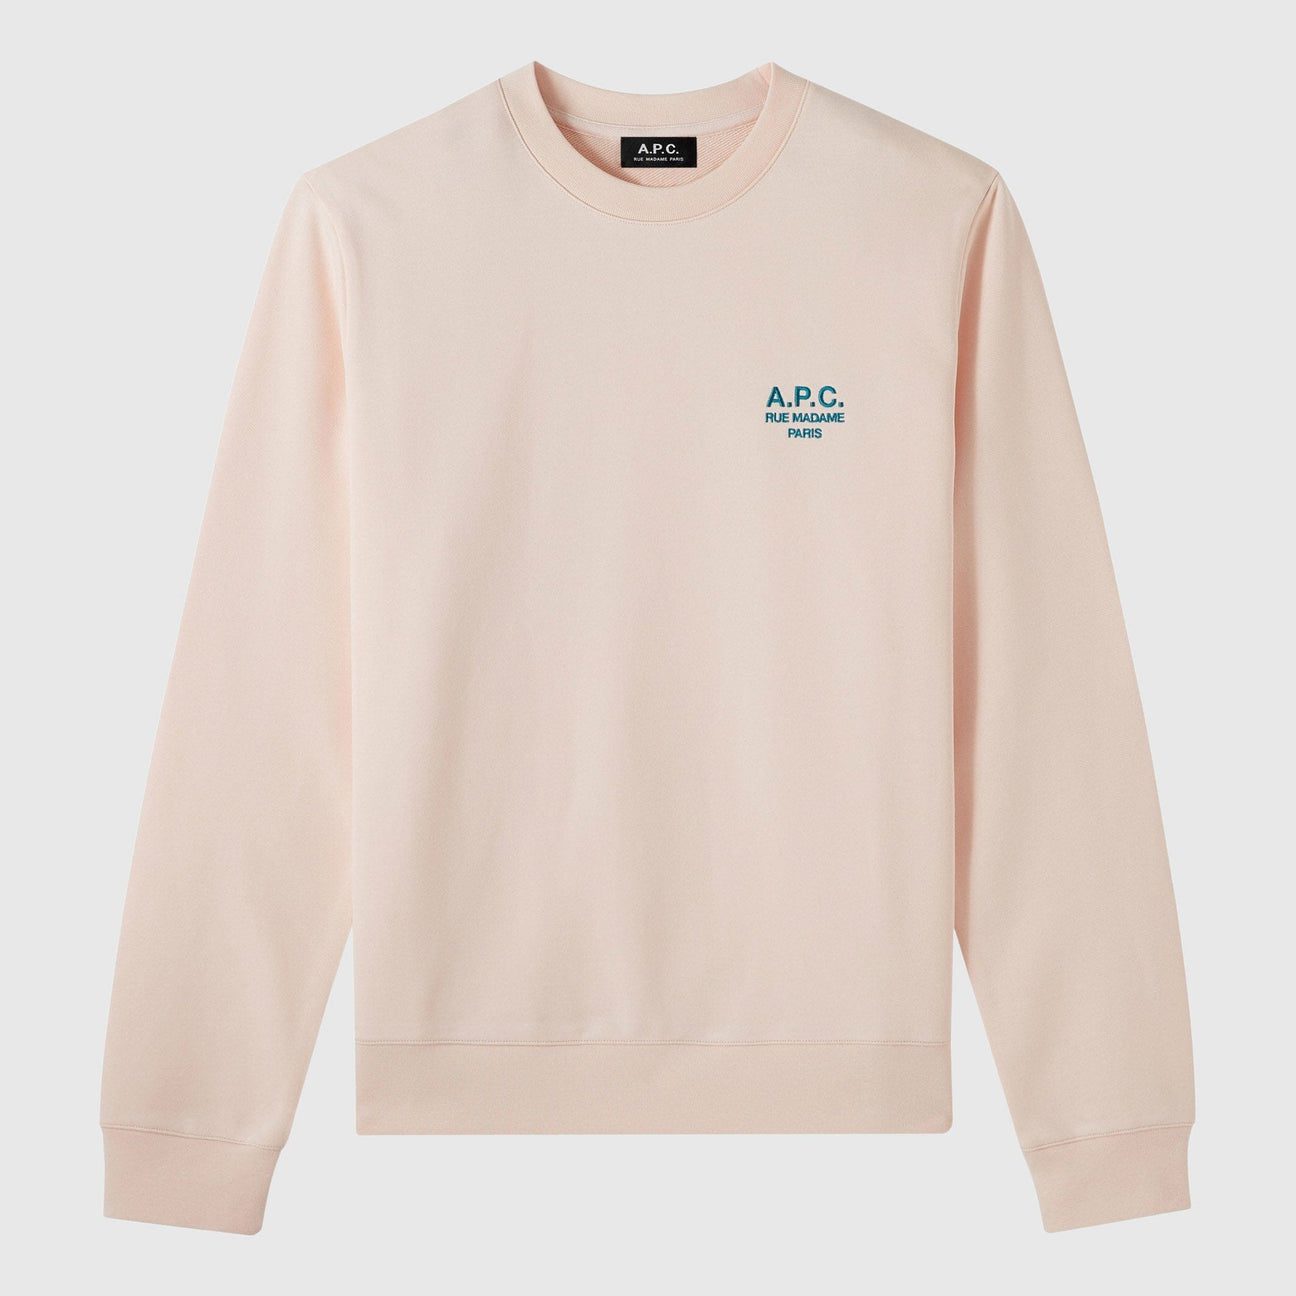 apc-rose-pale-rider-sweatshirt